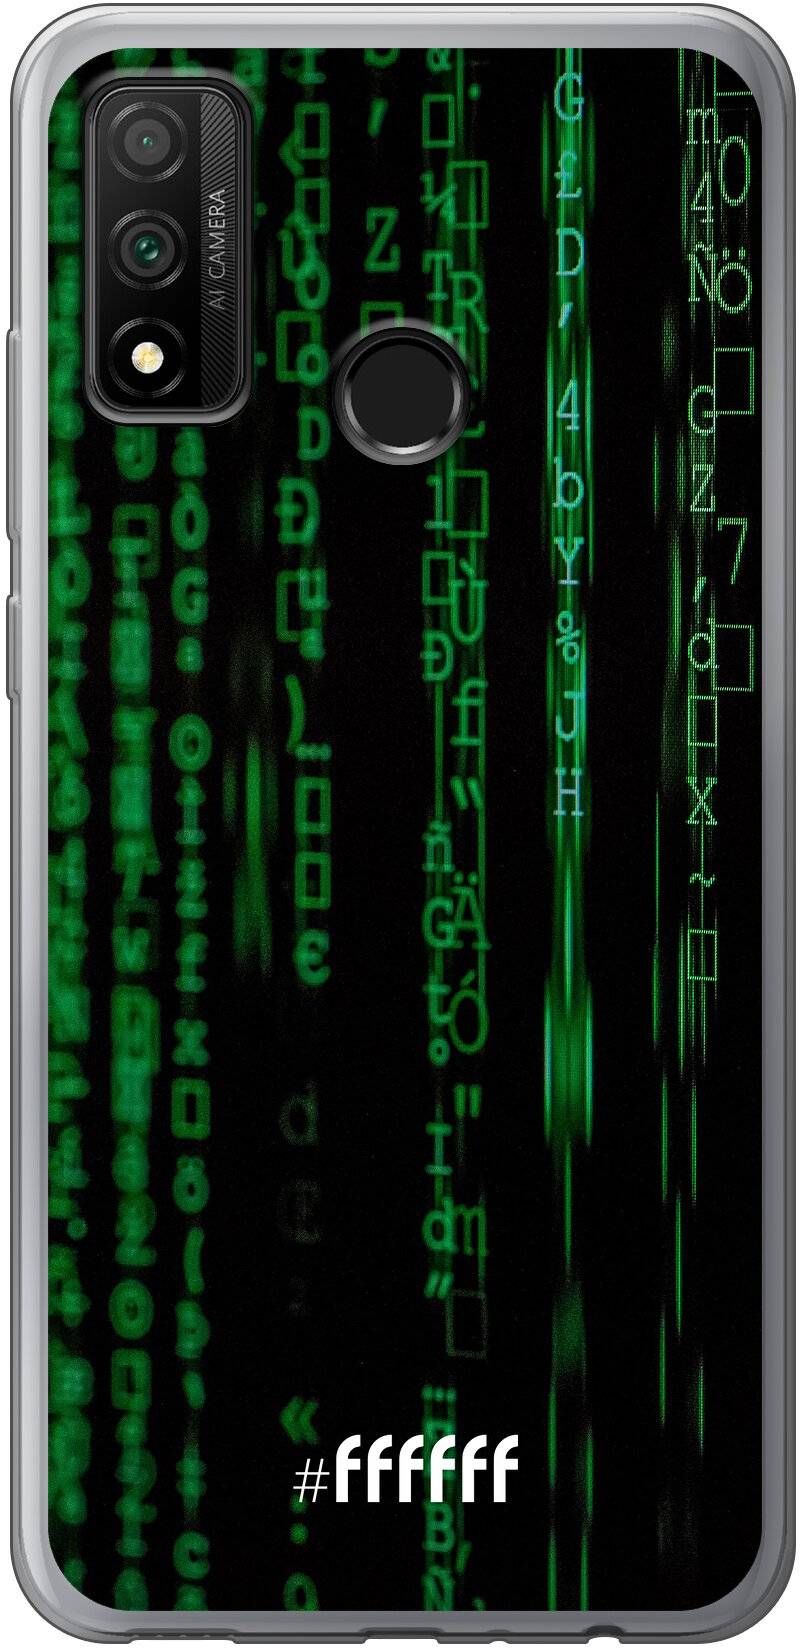 Hacking The Matrix P Smart (2020)